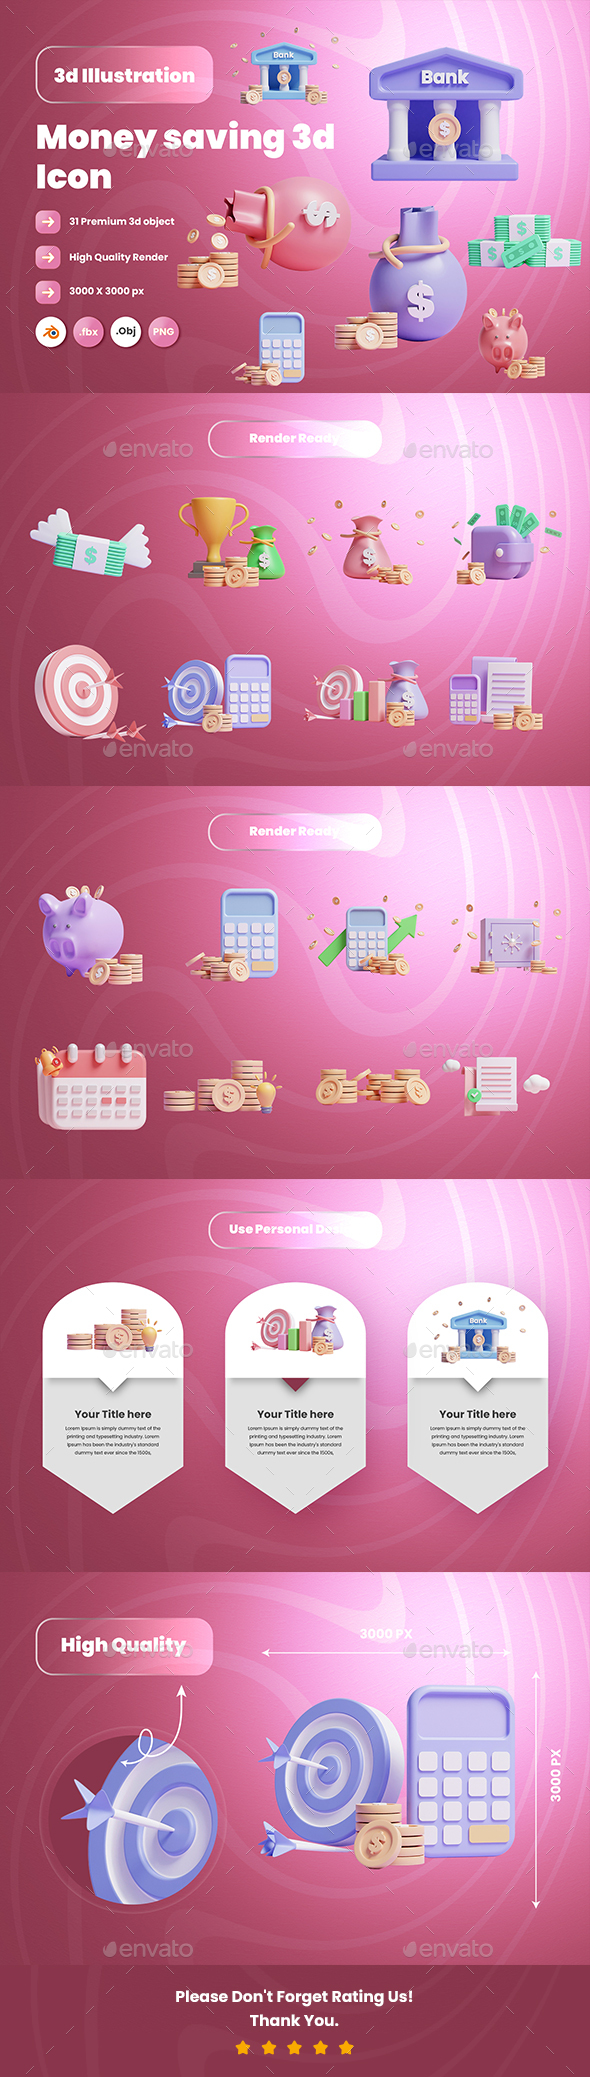 [DOWNLOAD]Money saving 3d Illustration  Icon Pack